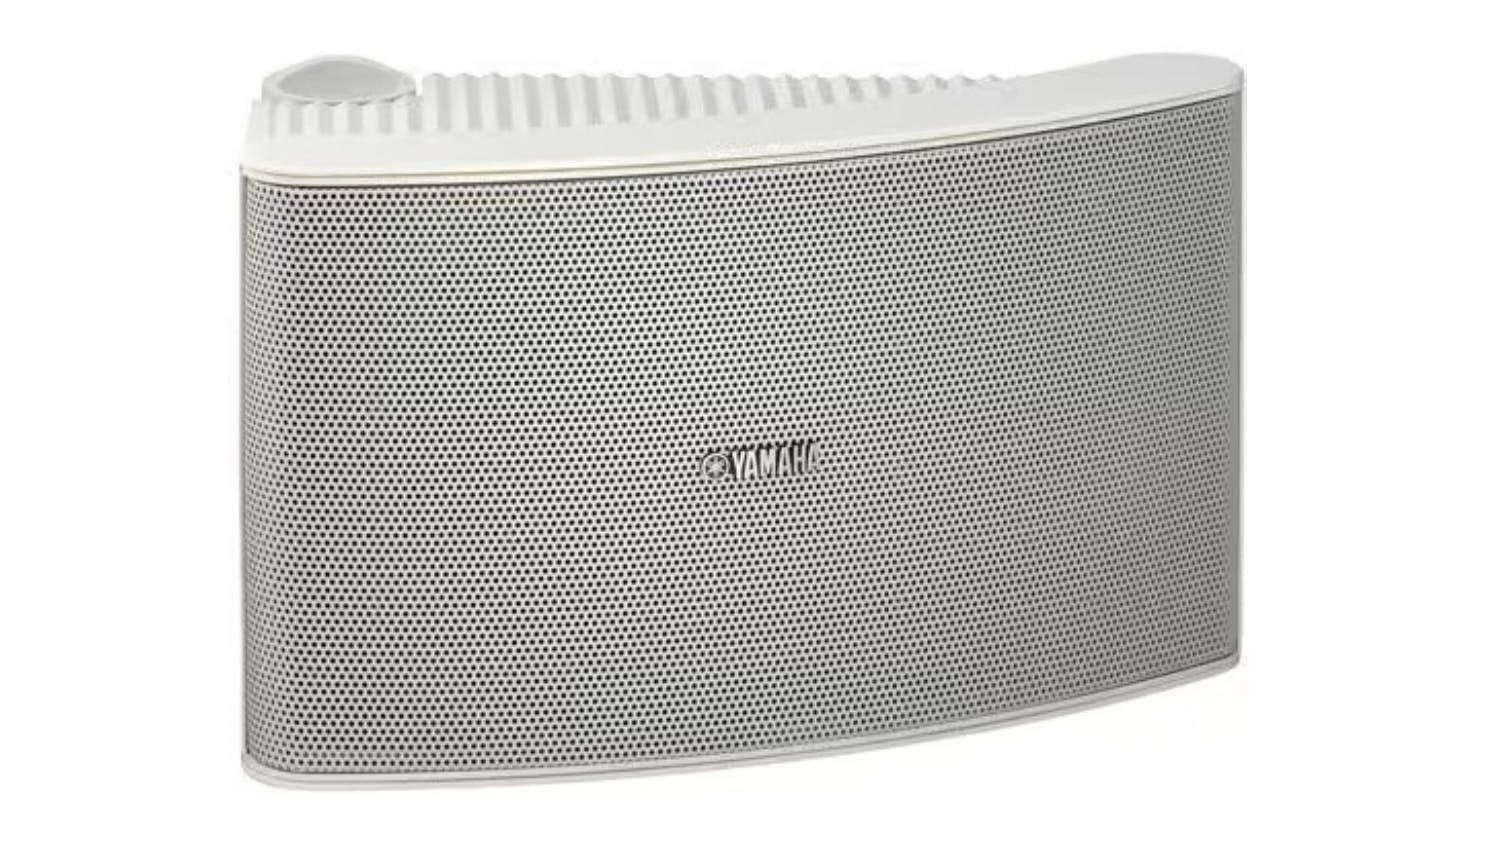 Yamaha NS-AW592 6.5" Outdoor Speaker - White (Pair)